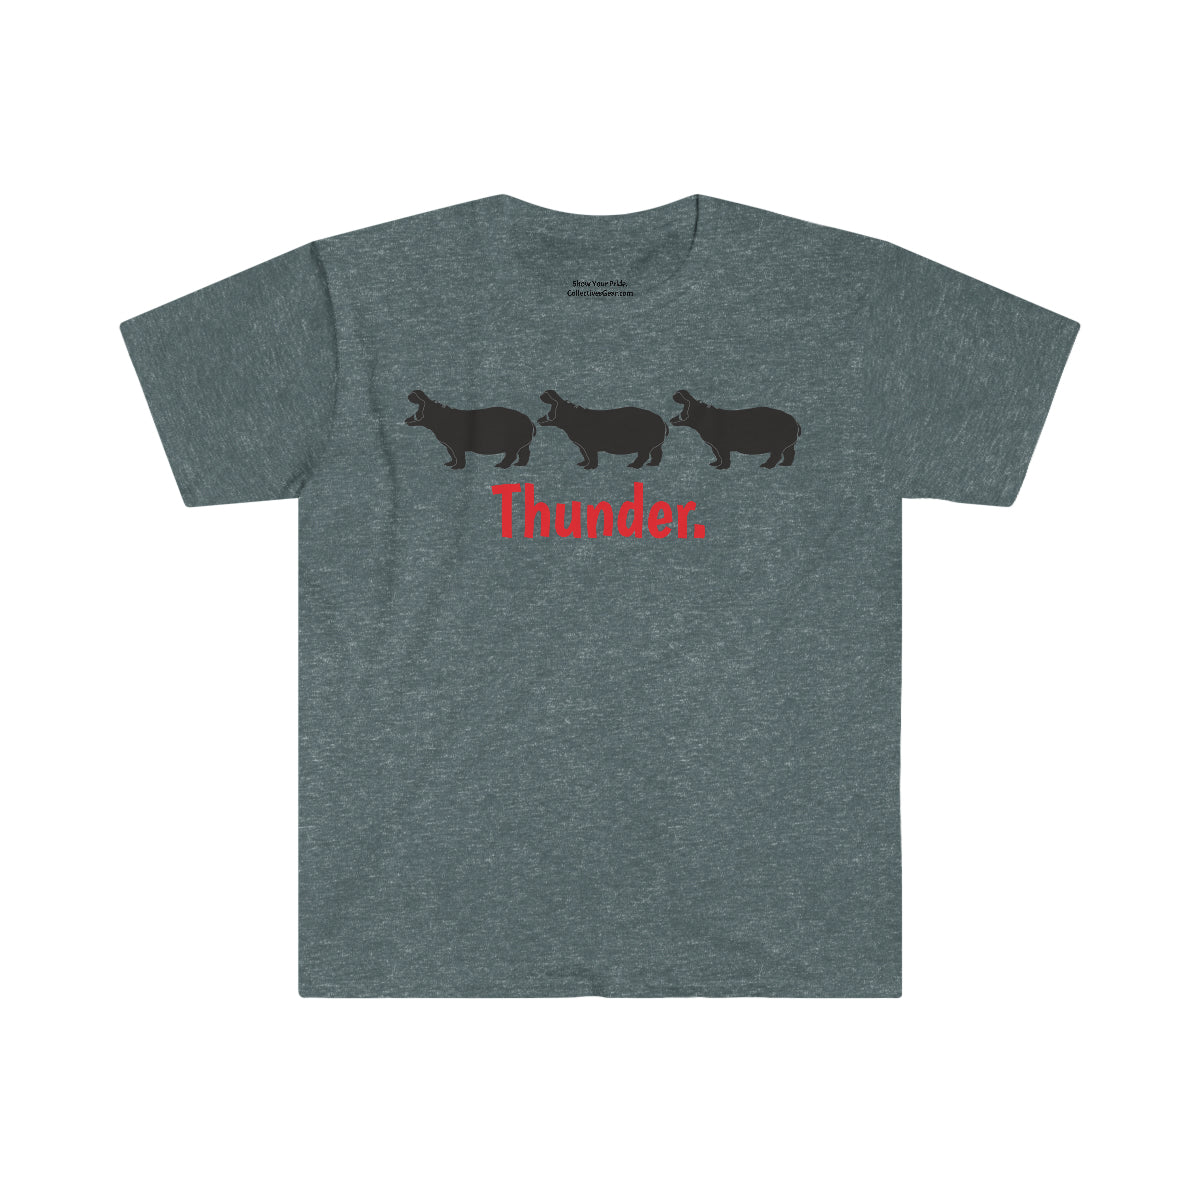 Thunder of Hippos T-shirt